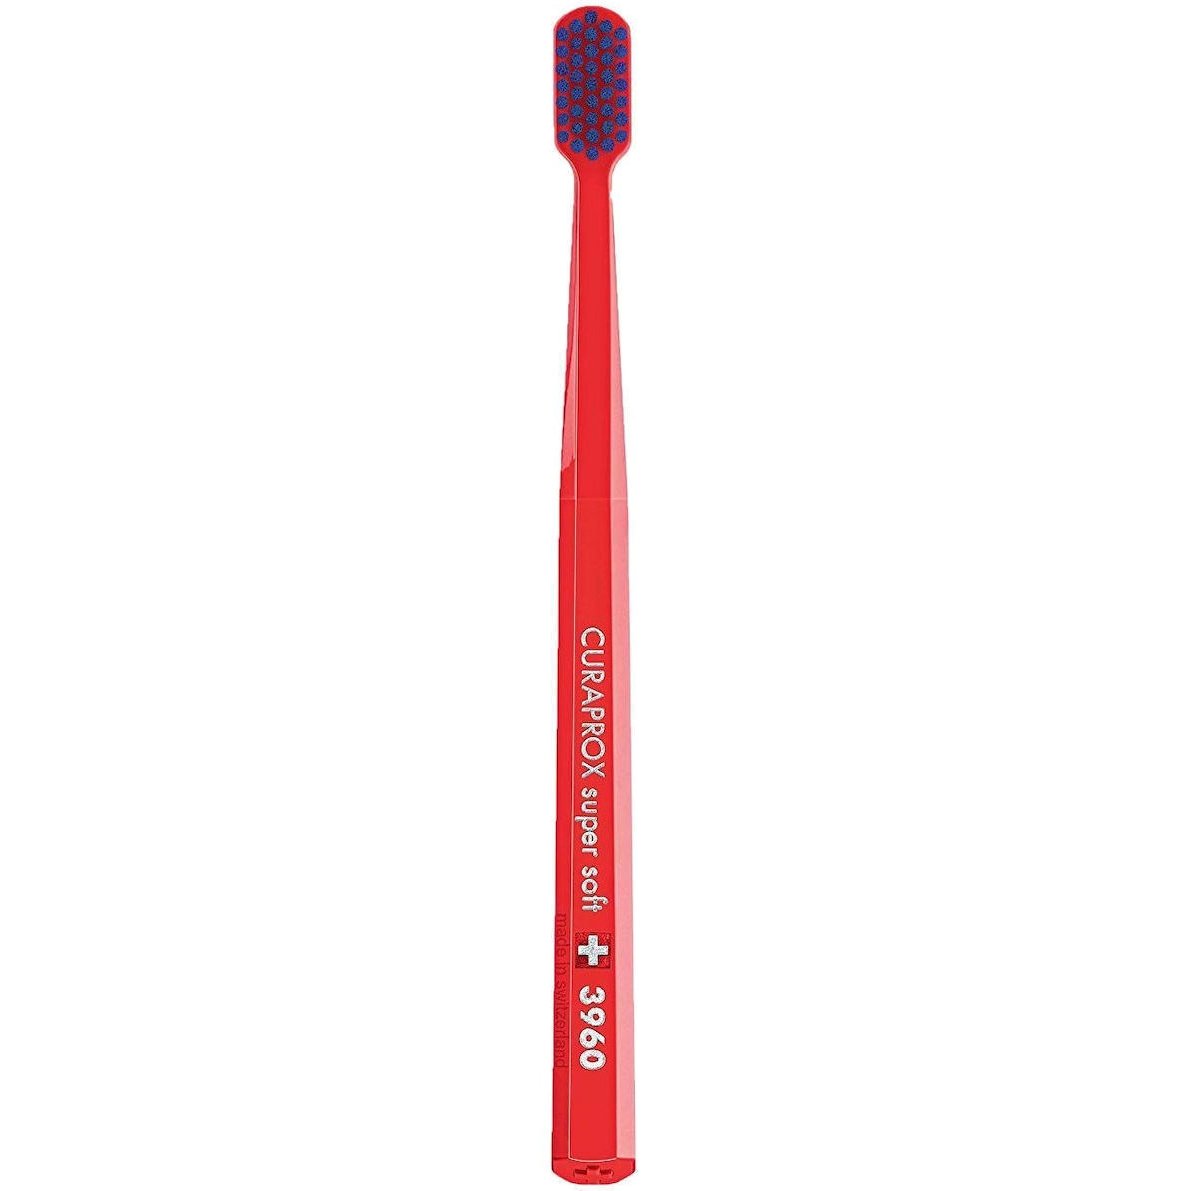 Curaprox CS 3960 Super Soft Toothbrush Πολύ Μαλακή Οδοντόβουρτσα με Εξαιρετικά Απαλές & Ανθεκτικές Ίνες Curen για Αποτελεσματικό Καθαρισμό 1 Τεμάχιο - Κόκκινο 49597